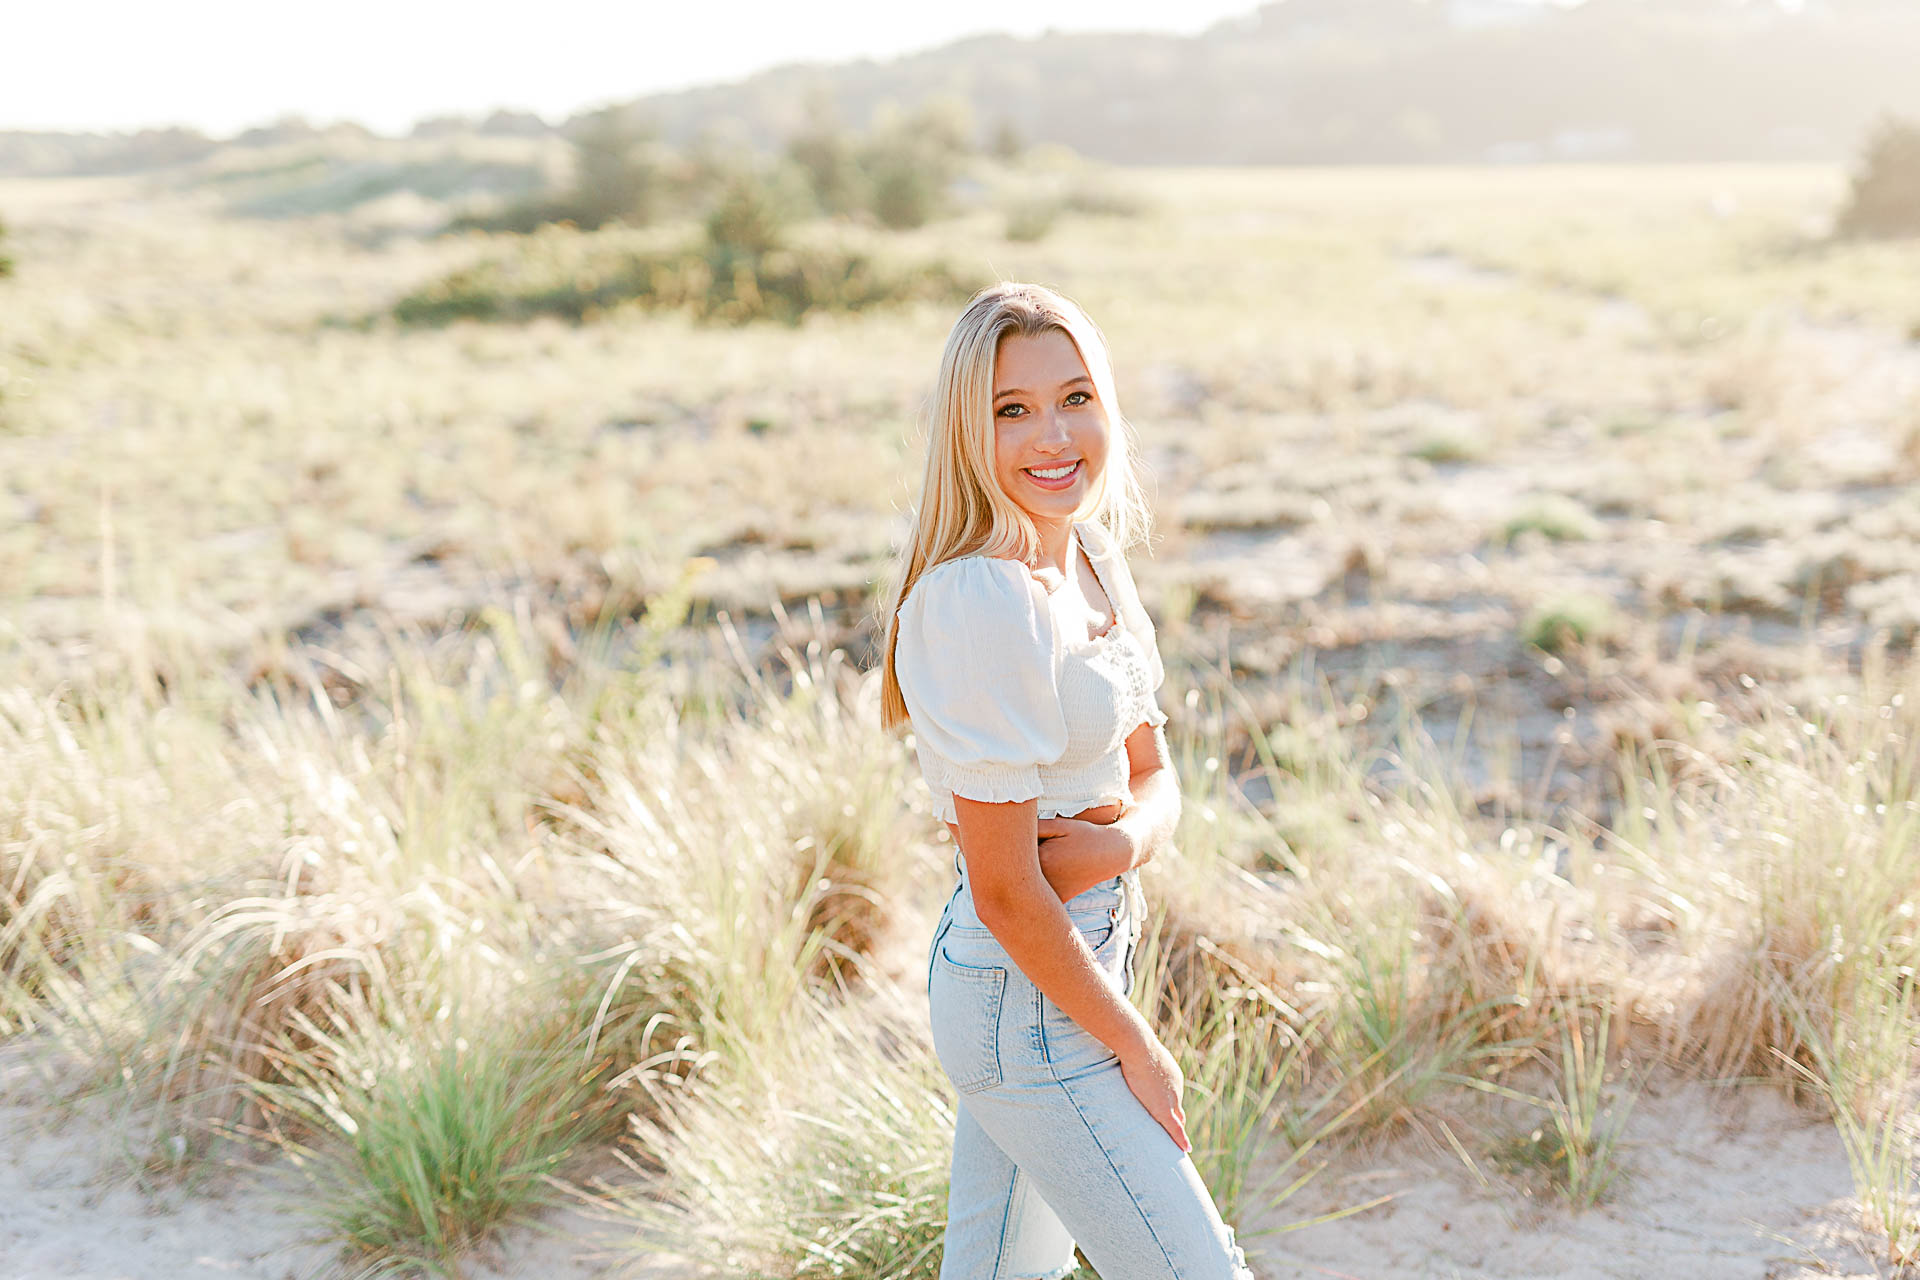 Photo by Scituate Senior Photographer Christina Runnals | High school senior girl standing in the beach grass